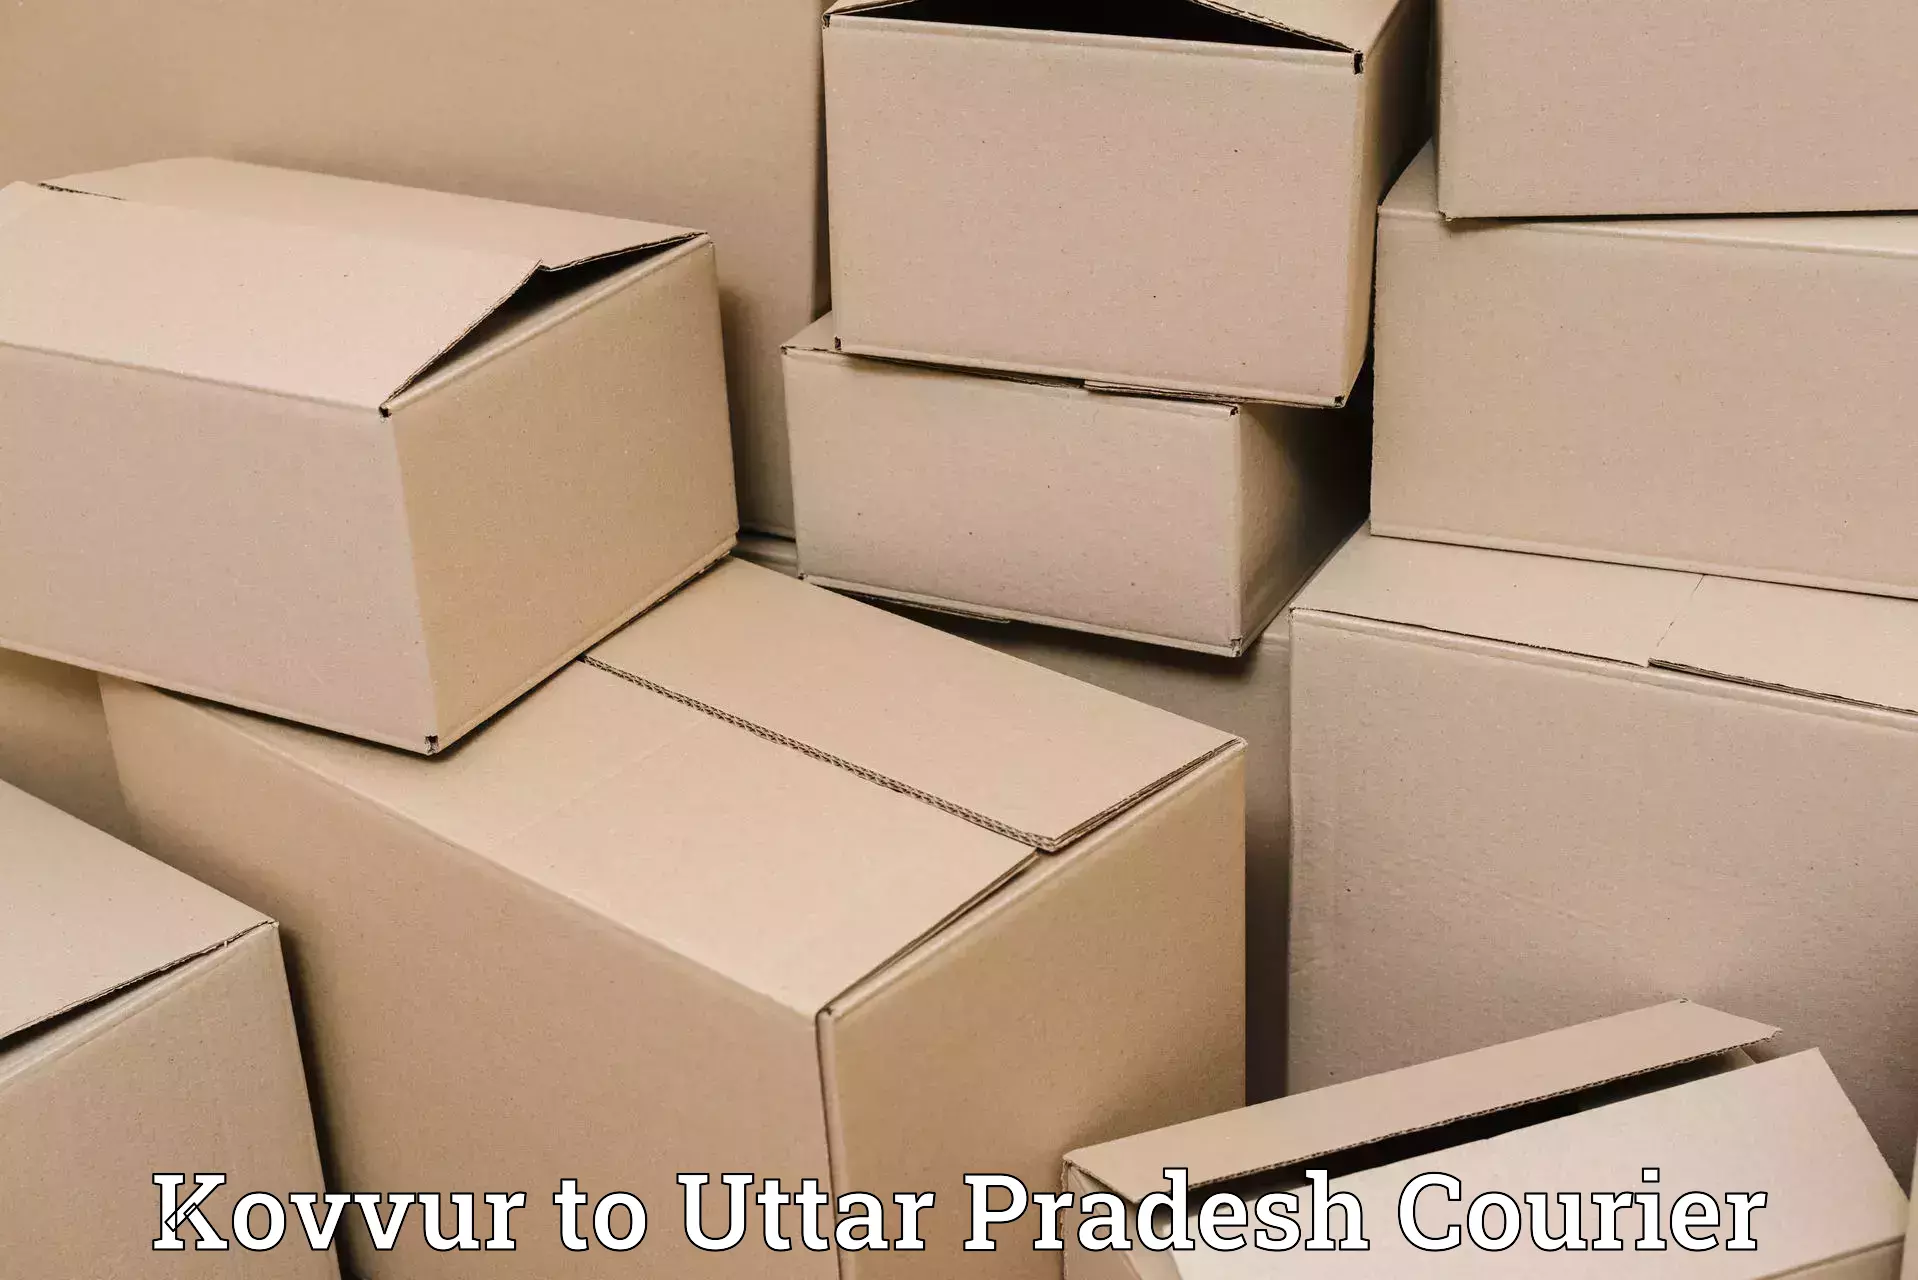 Affordable parcel service Kovvur to Sitapur